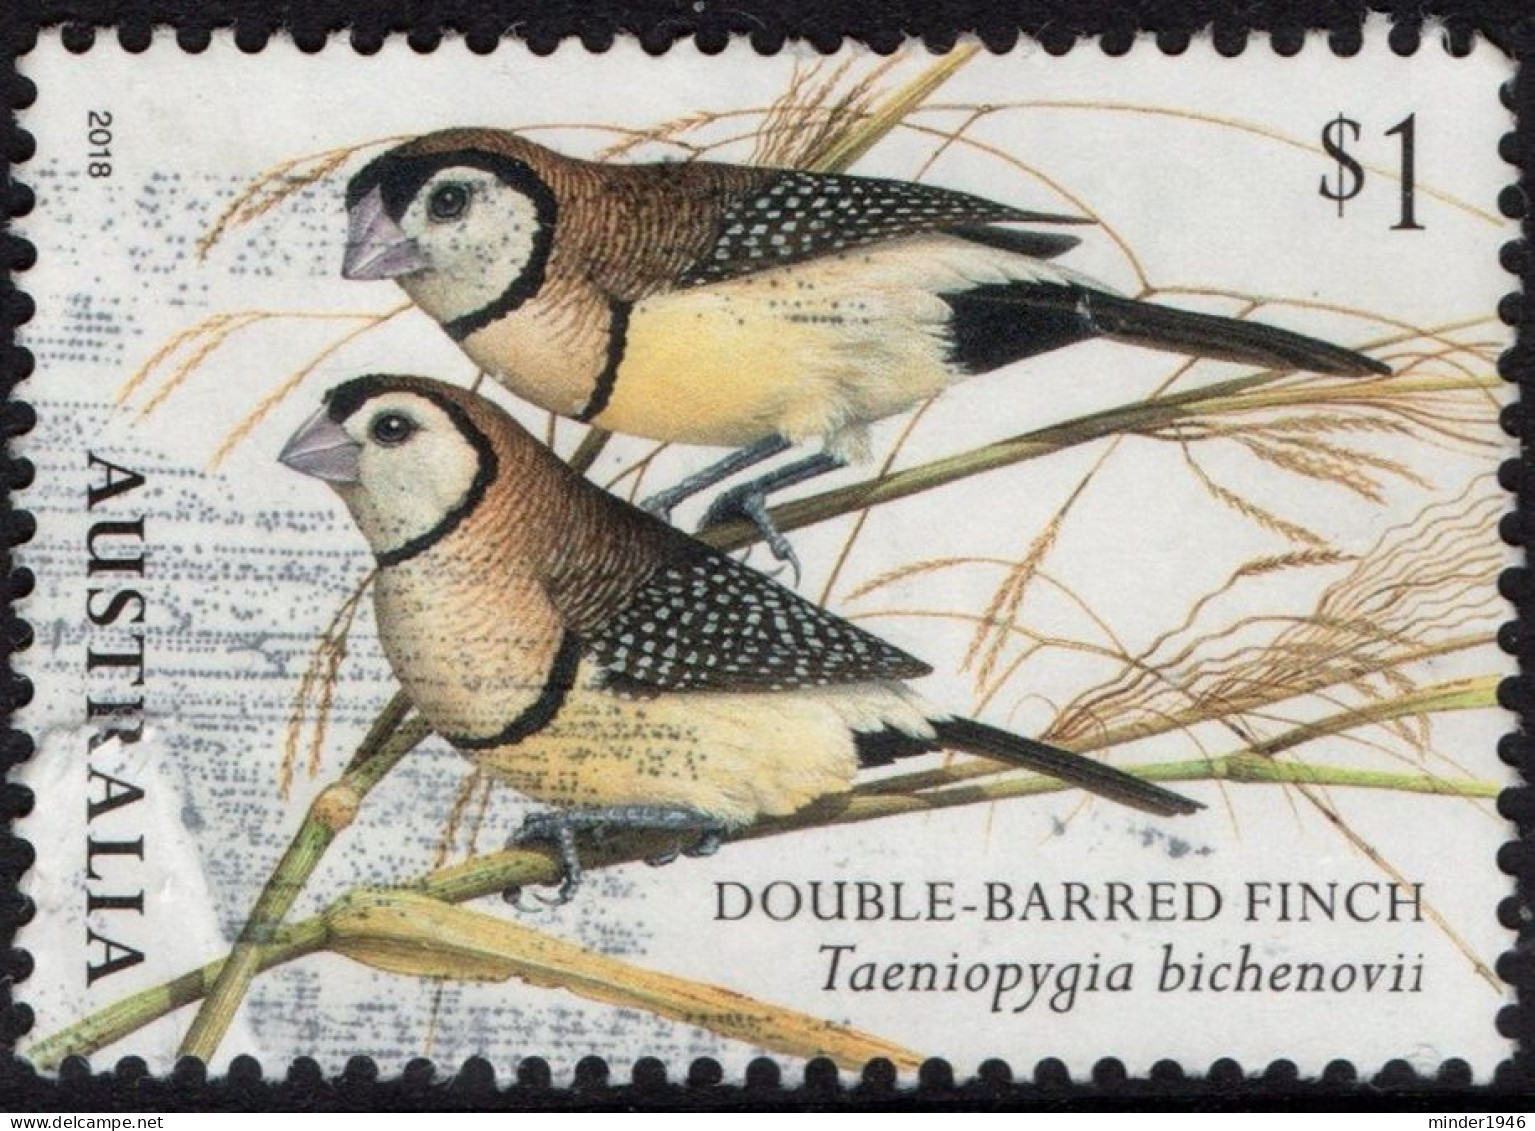 AUSTRALIA 2018 $1 Multicoloured, Birds - Finches Of Australia-Double Barrel Finch Used - Oblitérés